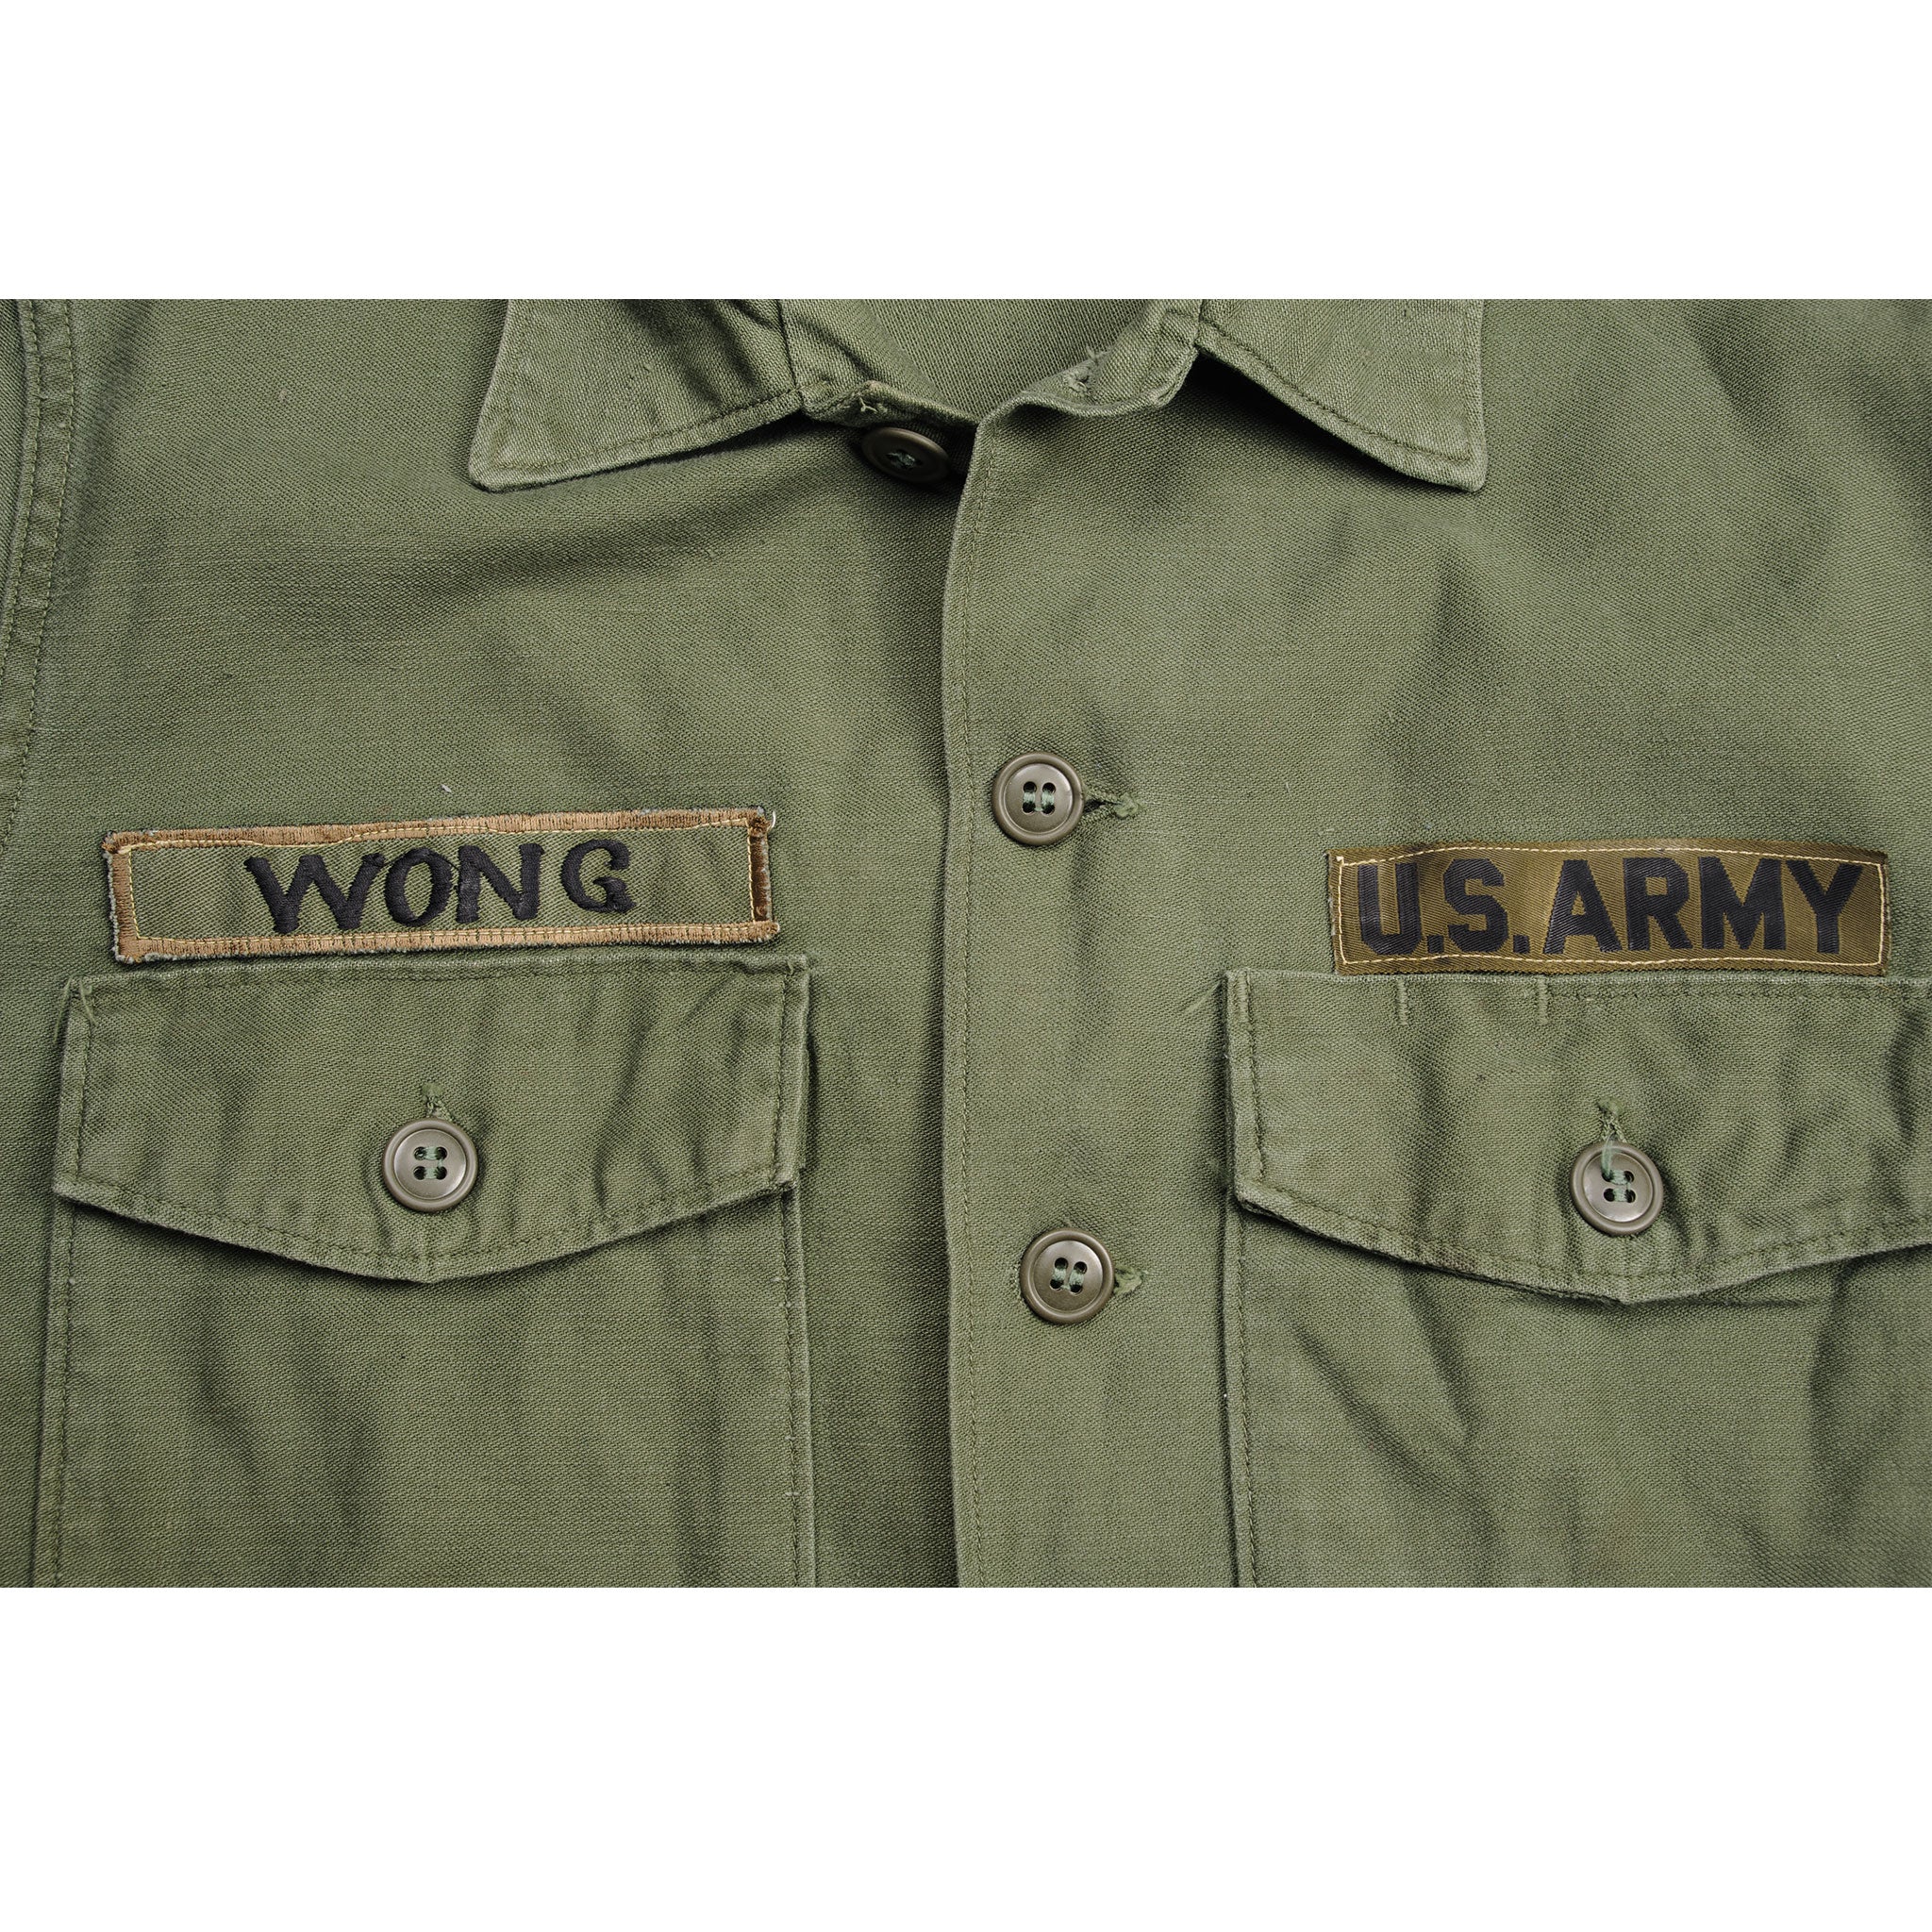 US Army Utility Shirt P-64 60's Vietnam War Size Medium – Rare